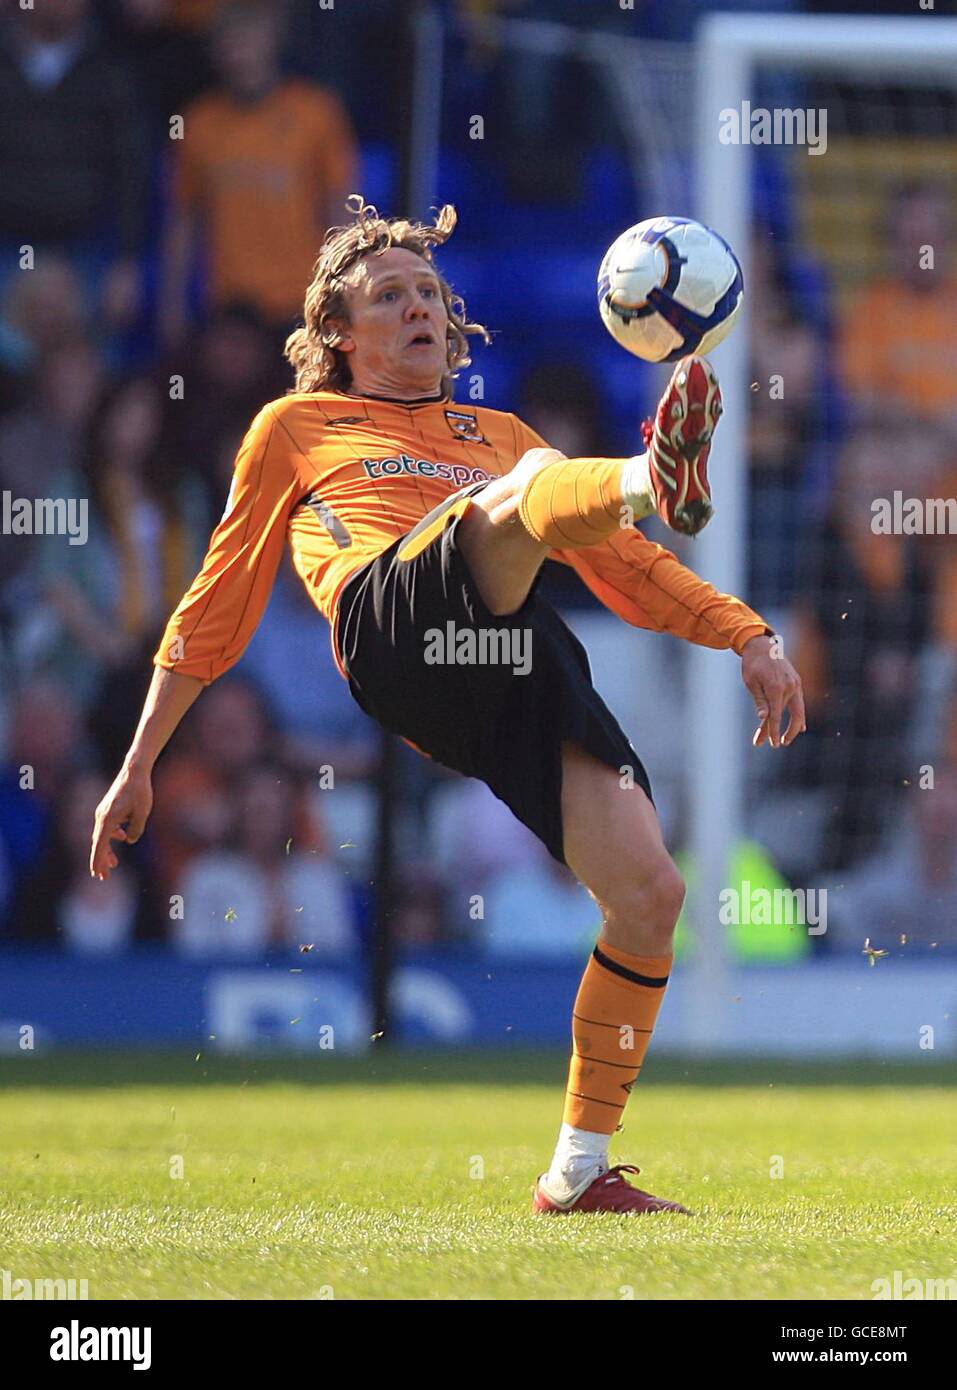 Soccer - Barclays Premier League - Birmingham City v Hull City - St Andrews' Stadium. Hull City's Jimmy Bullard kicks the ball over his head. Stock Photo